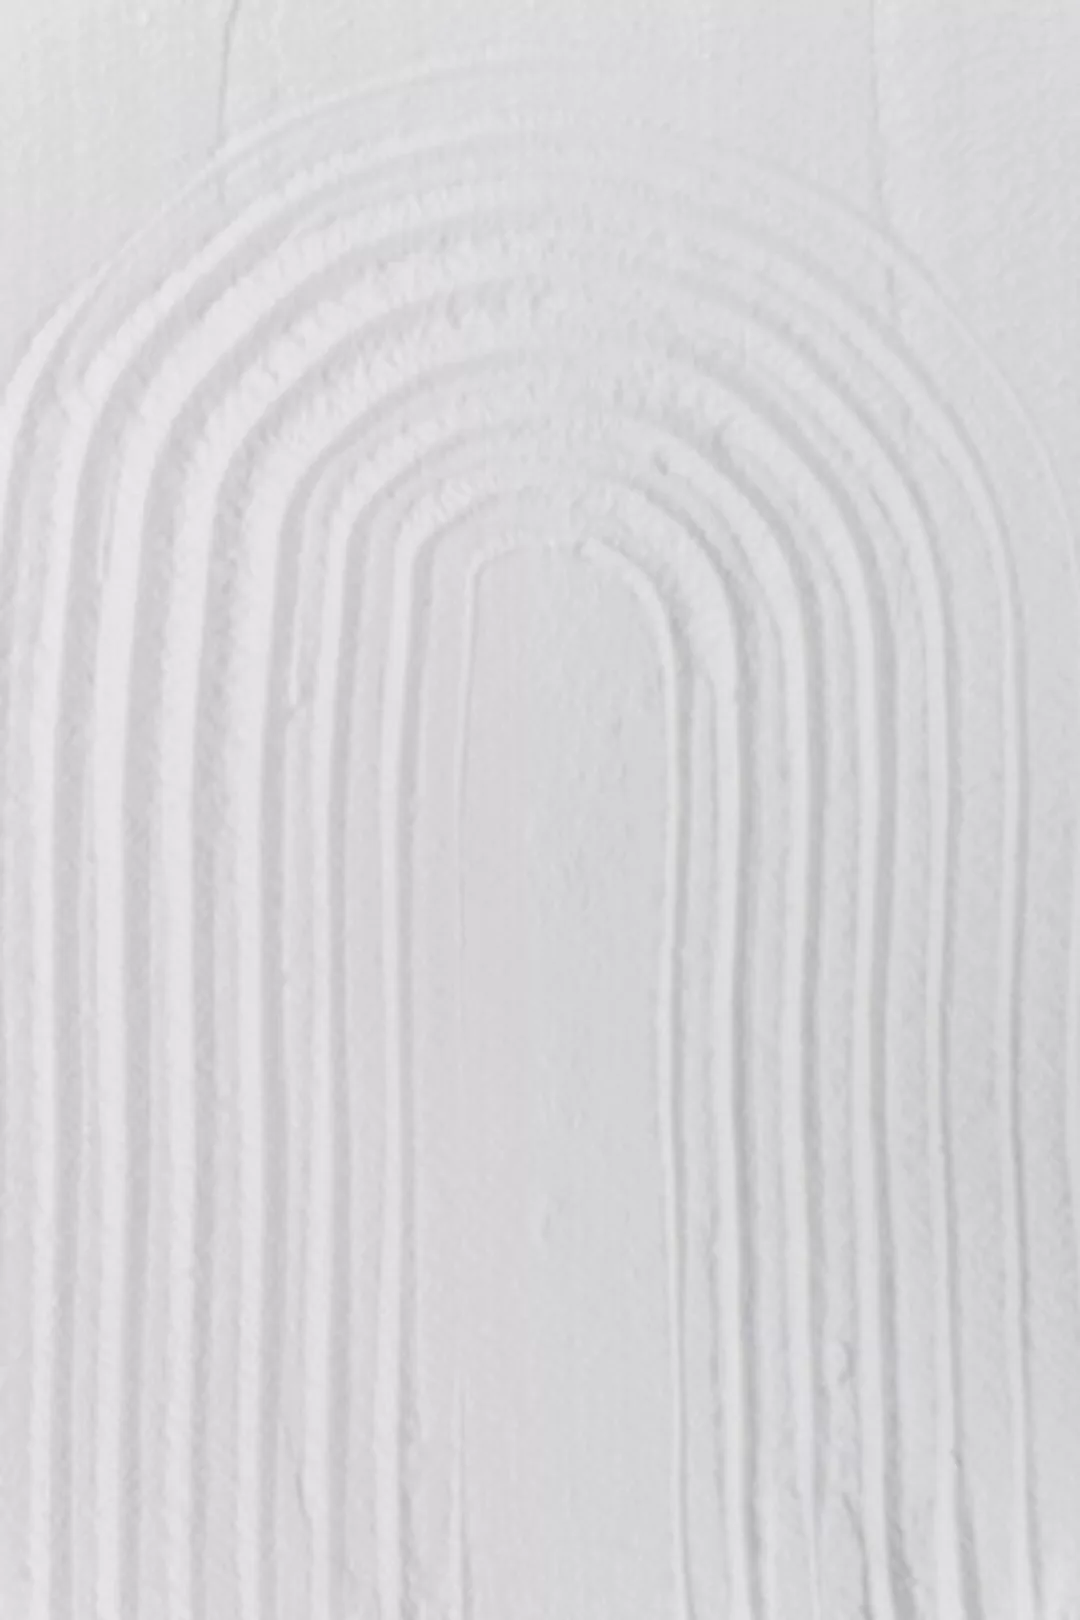 Poster / Leinwandbild - White Textures 2 - Minimal Rainbow günstig online kaufen